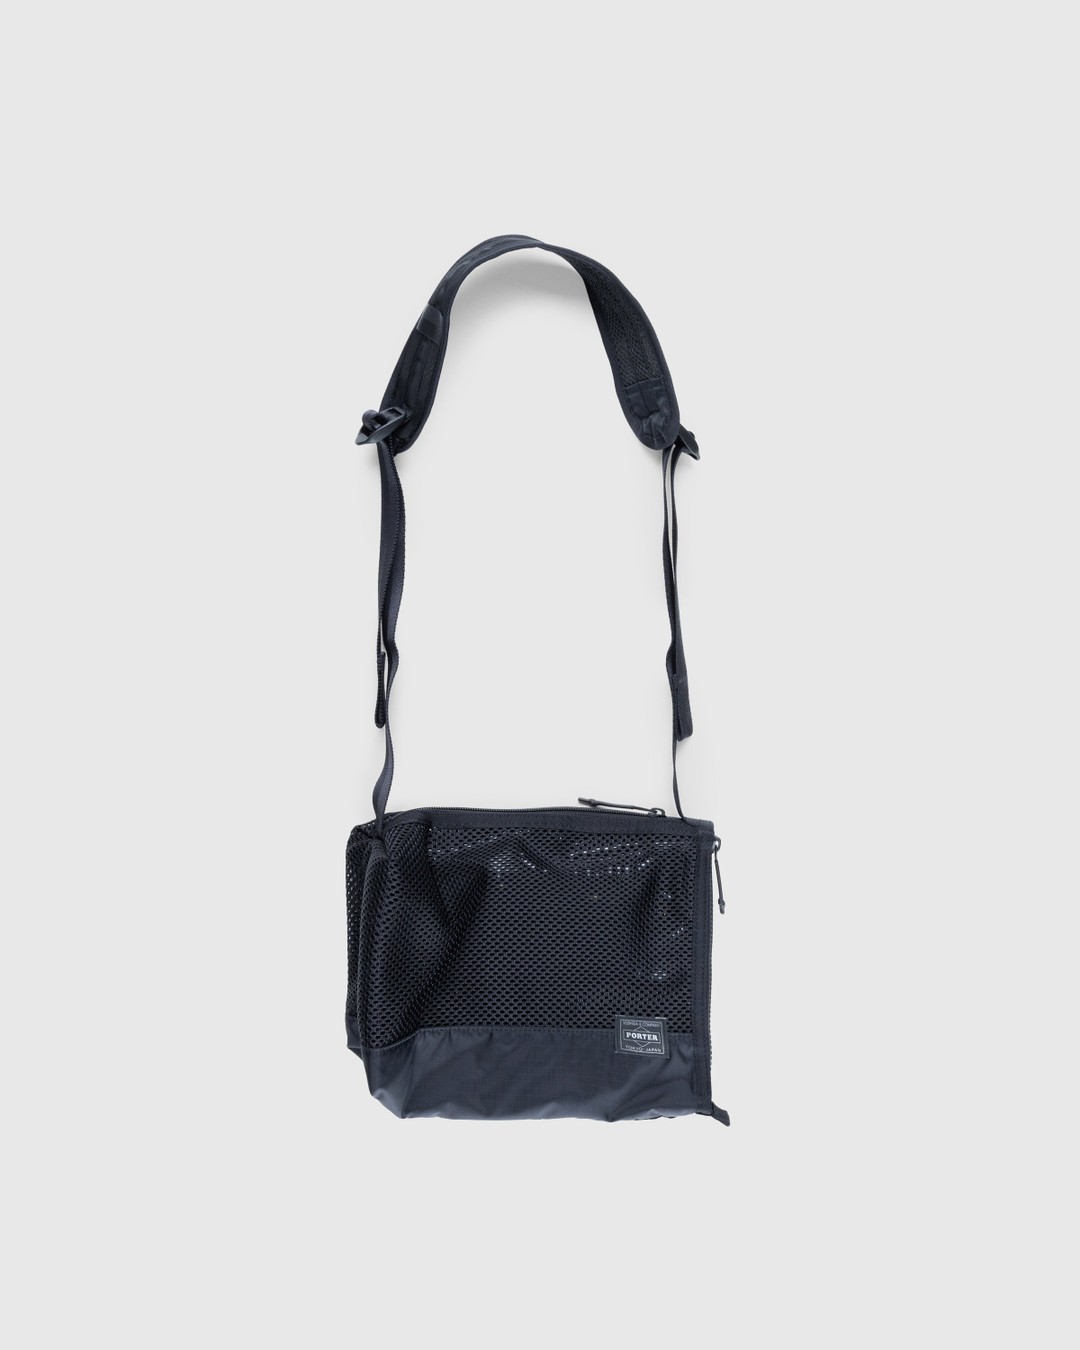 Porter-Yoshida & Co. – Screen Front Side Bag Black - Bags - Black - Image 1